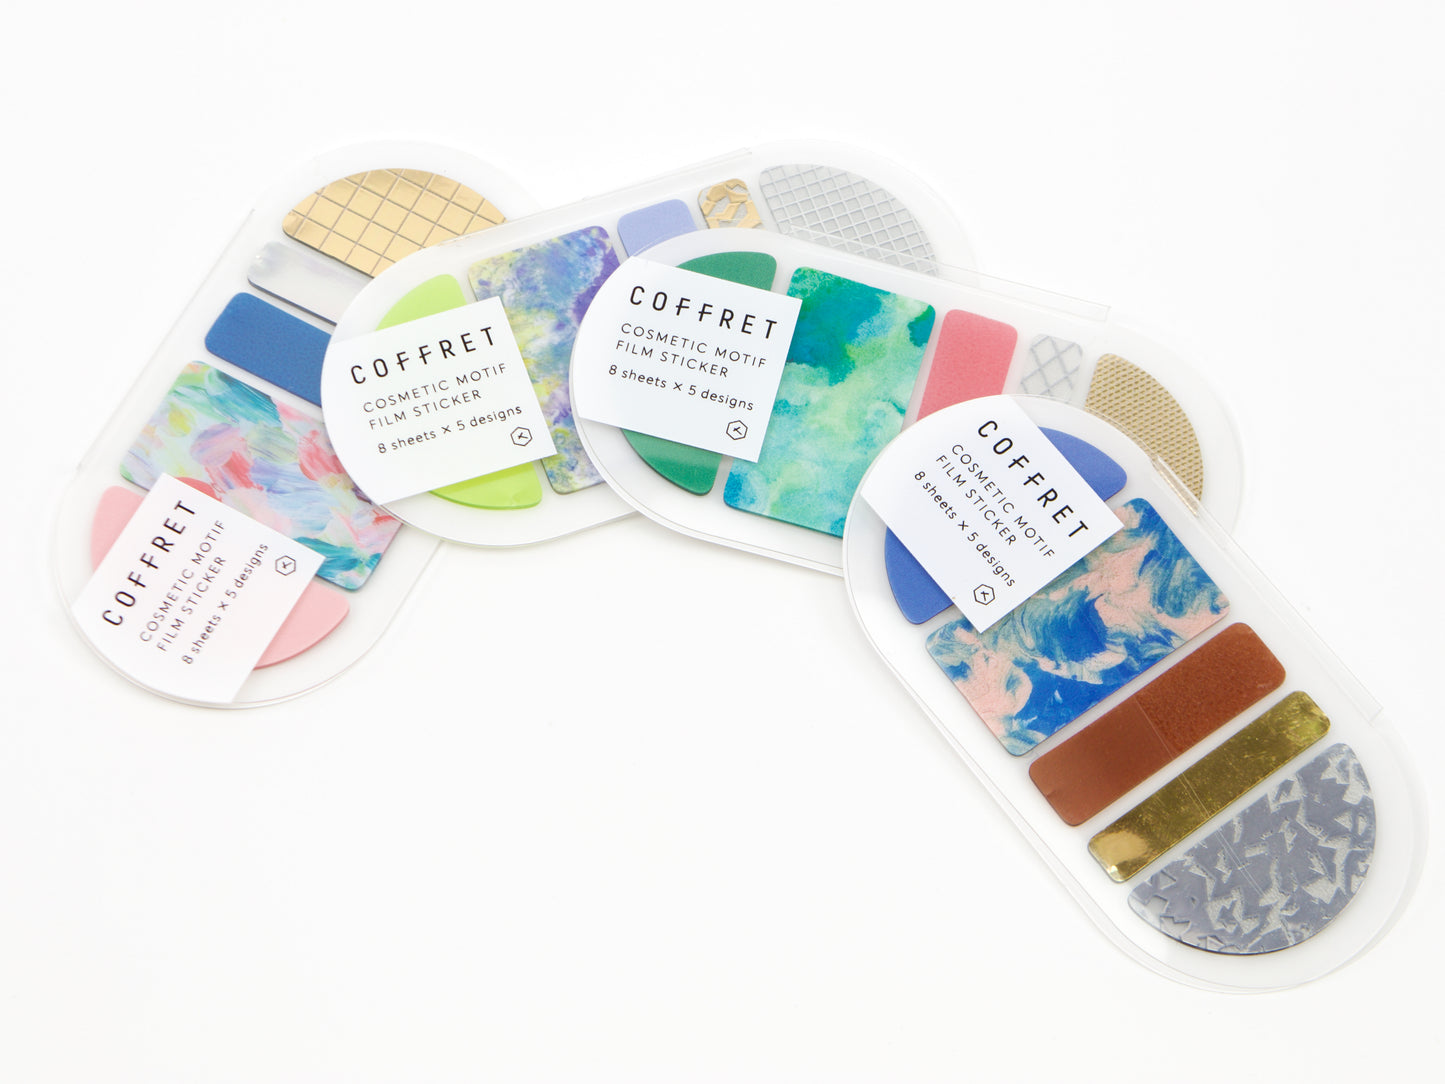 Hitotoki Coffret Cosmetic Motif Film Sticker Mixed Shapes